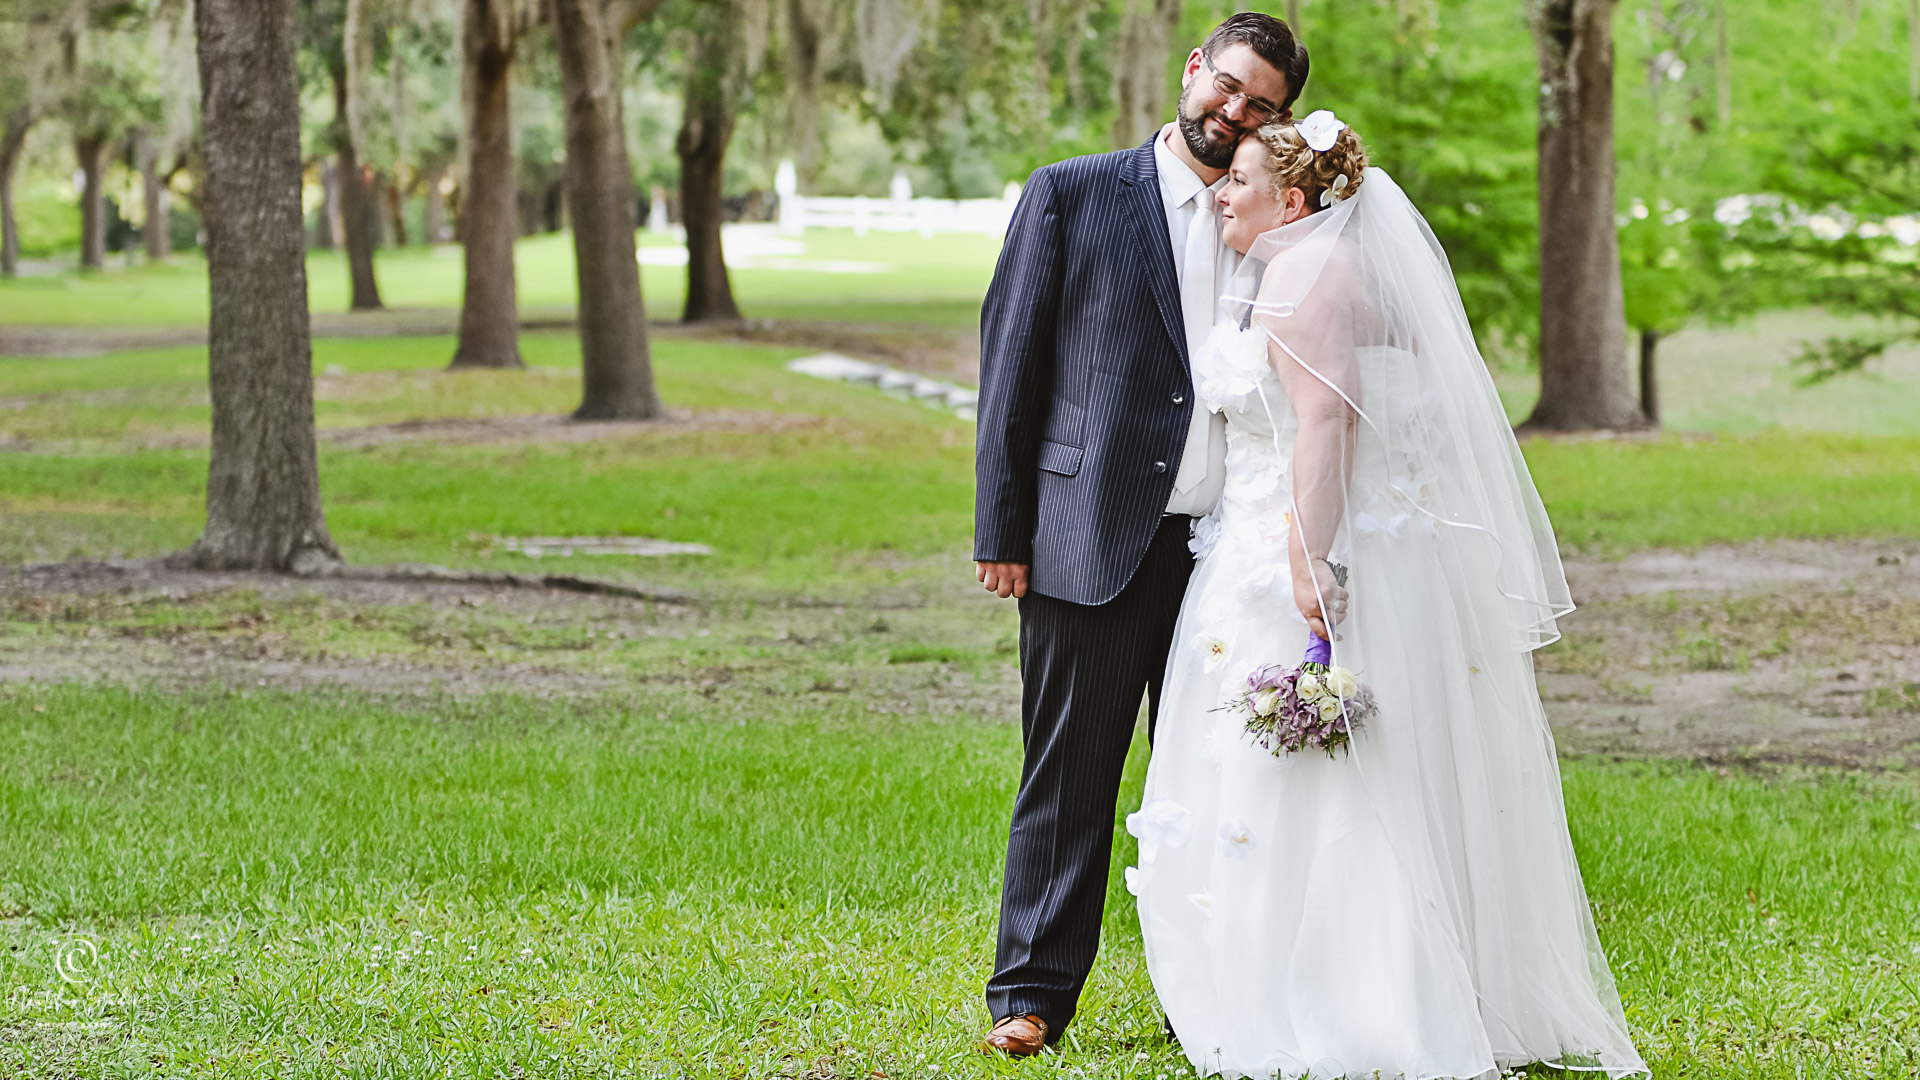 Orlando destination wedding showing couple hugging in grassy area